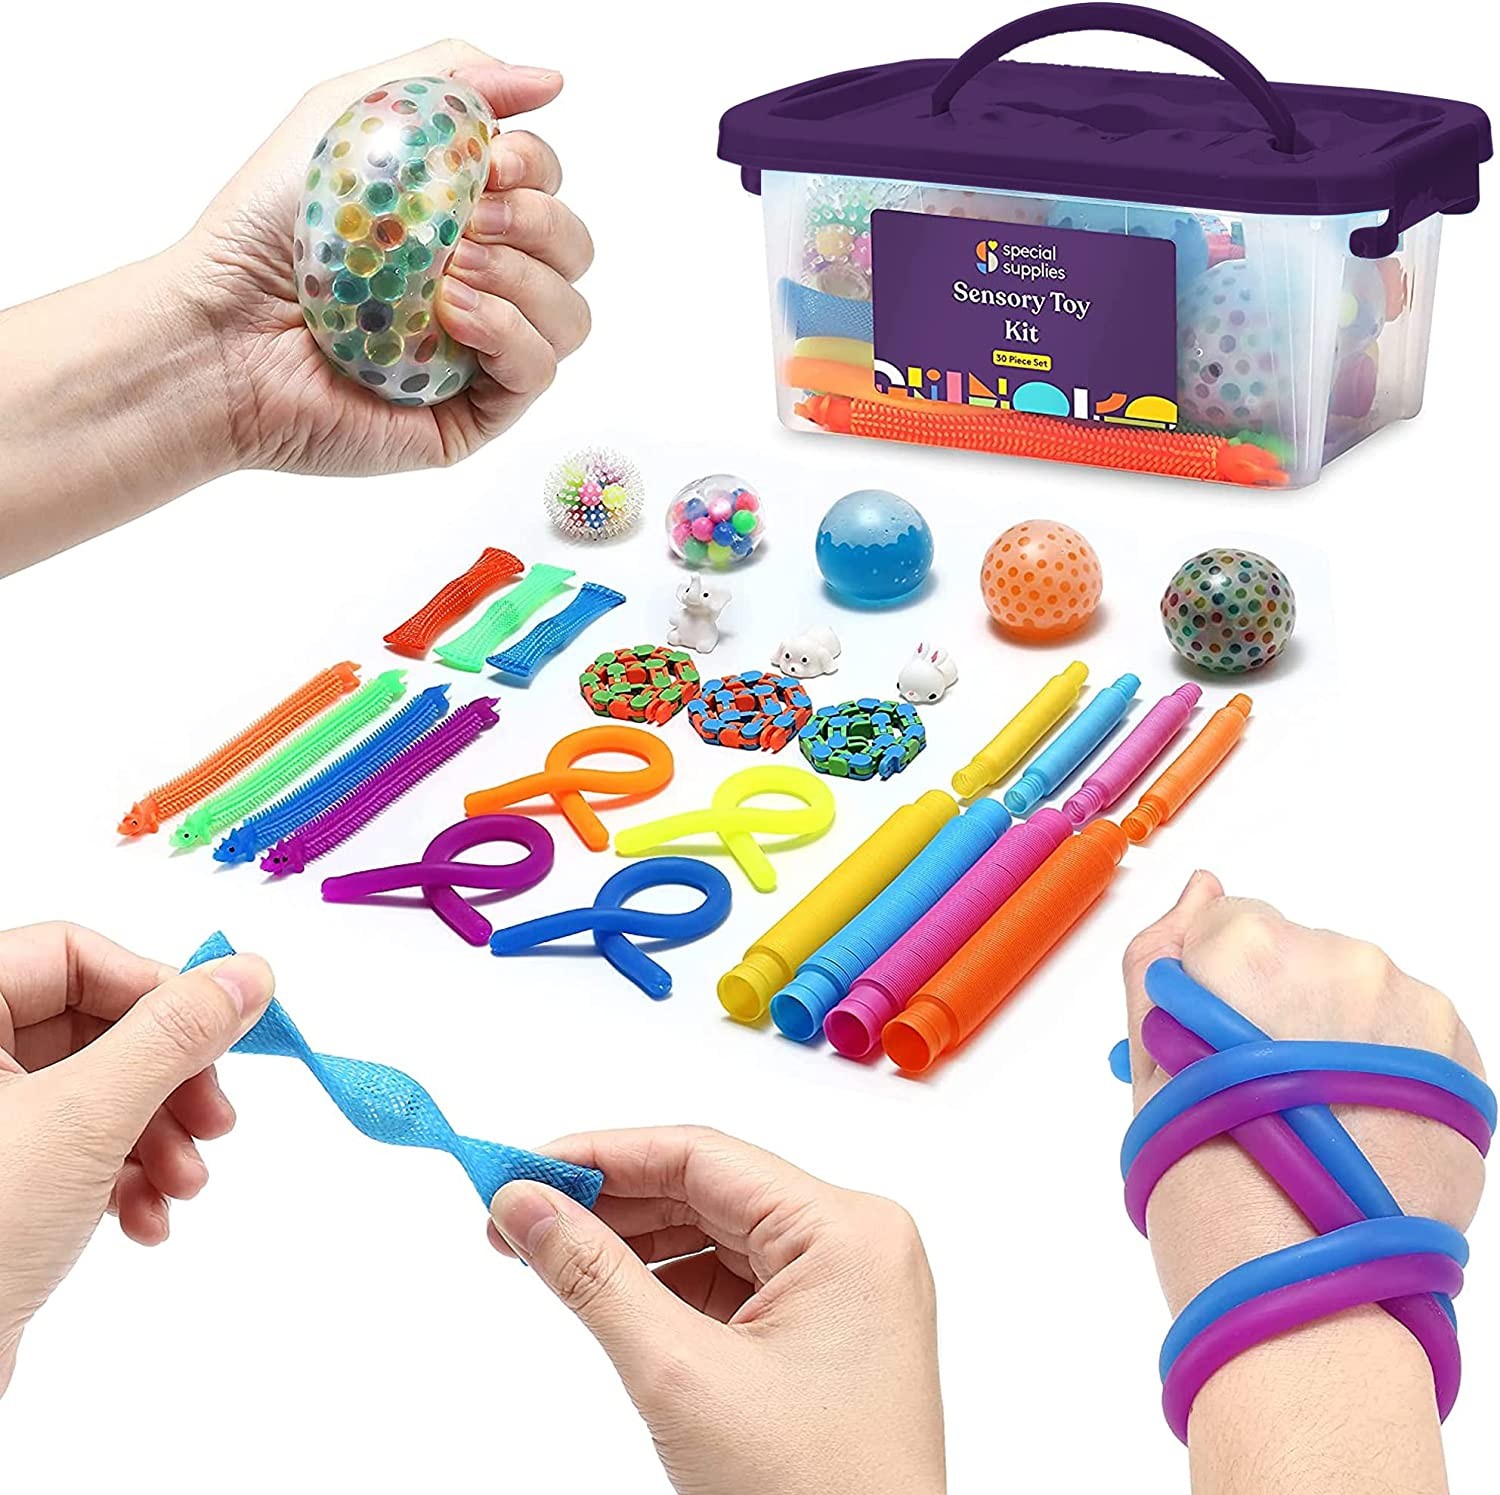 Fidget Toy Packs, Cheap Sensory Toy, 20Pcs Fidget Toy Set for Kids